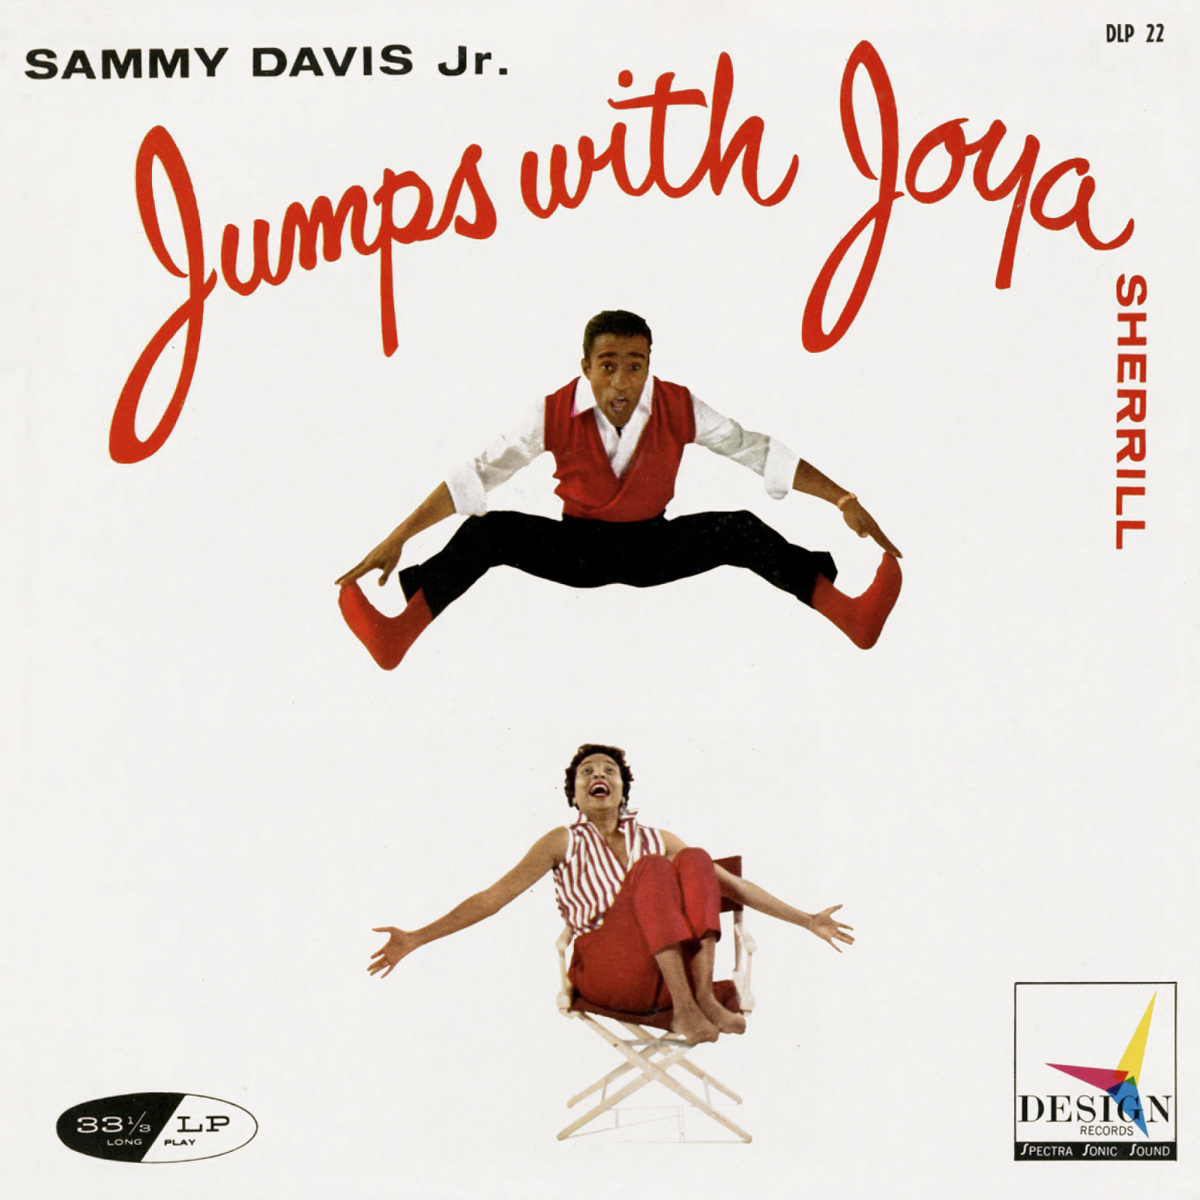 Sammy Jumps With Joya LP